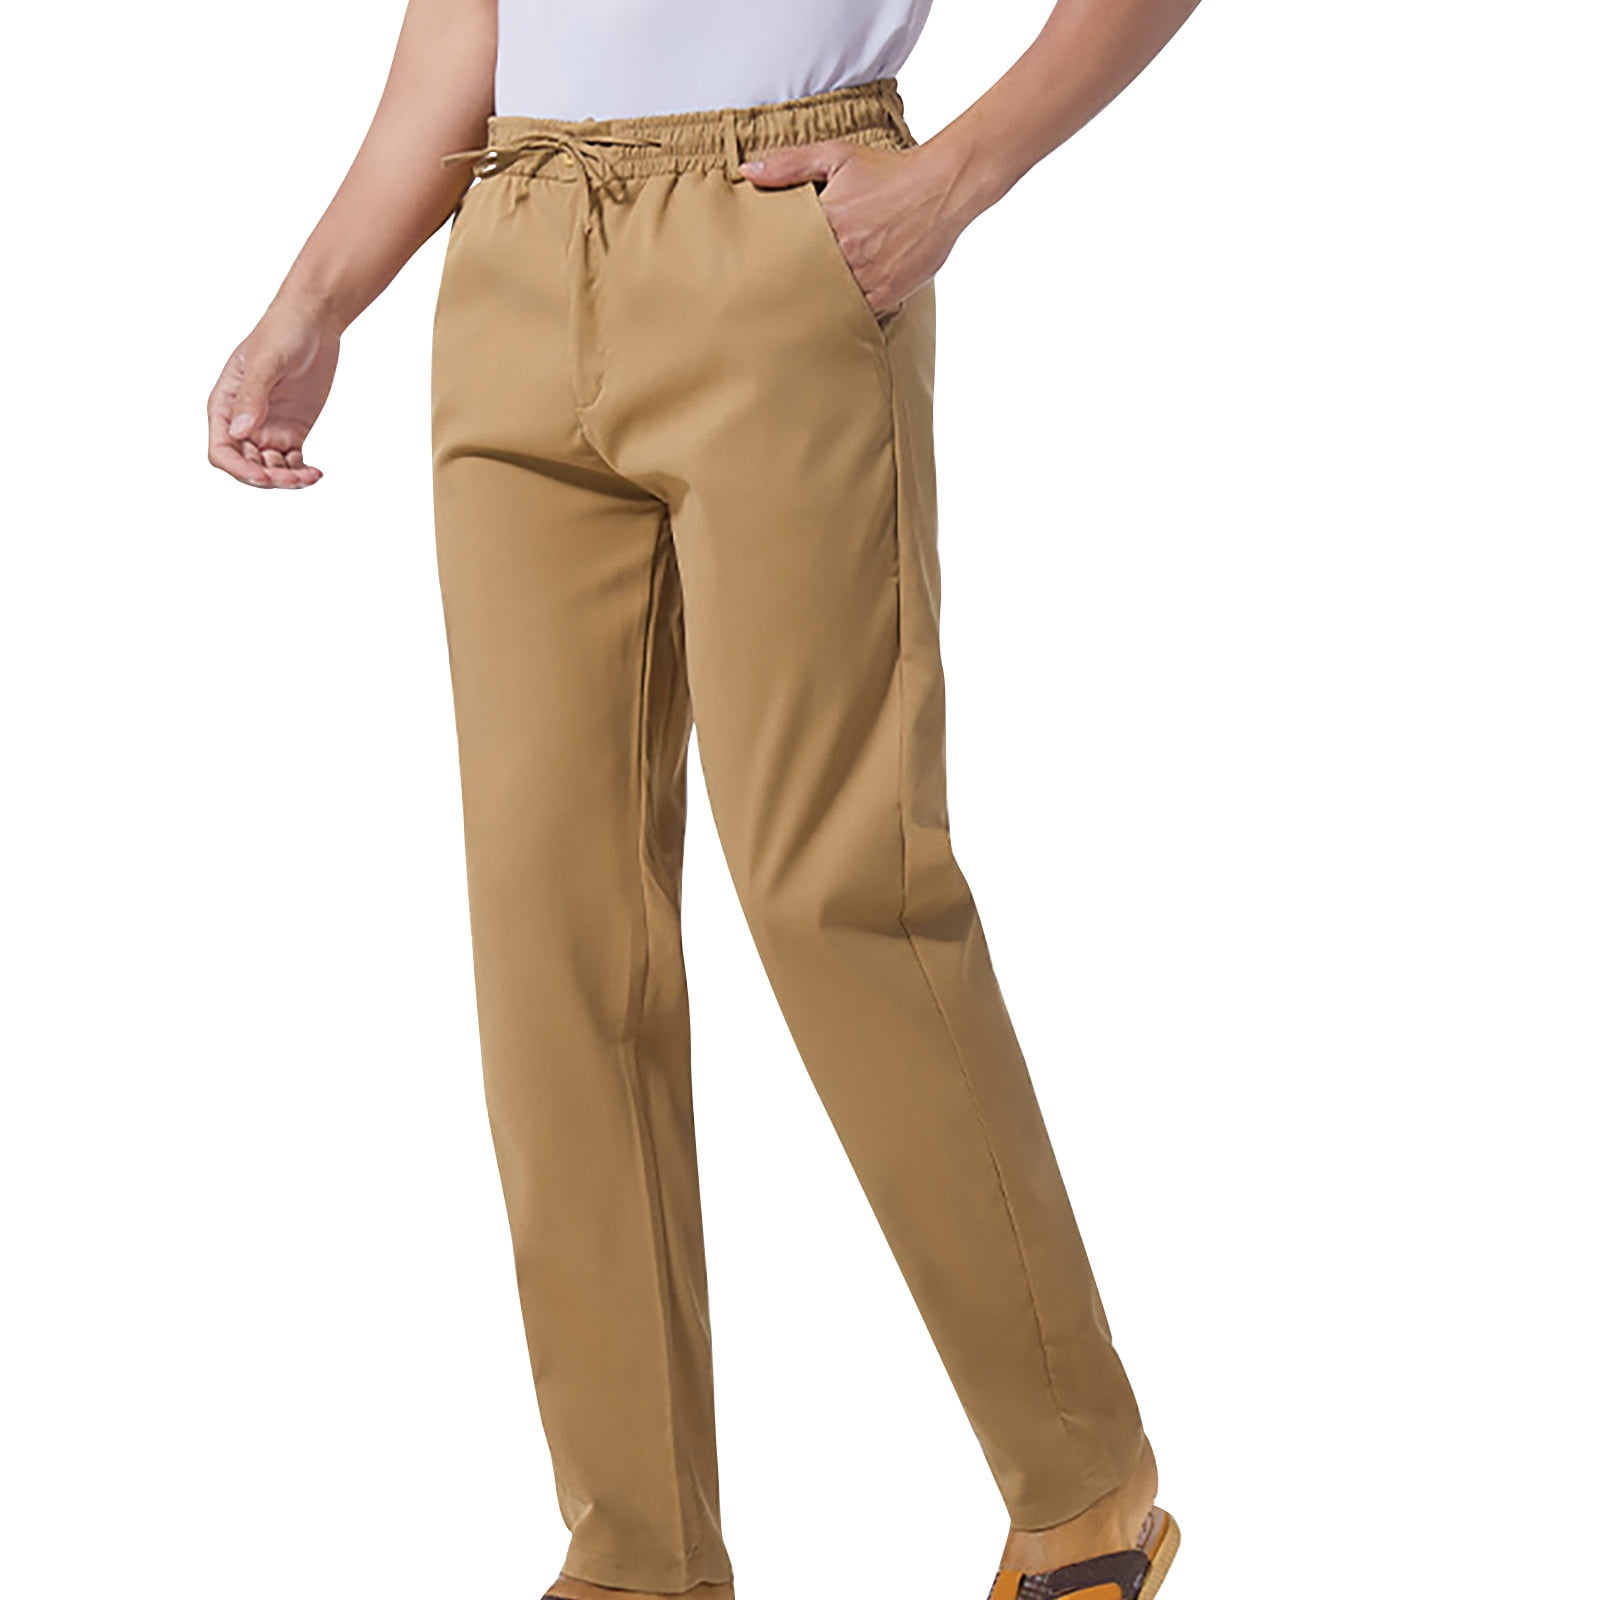 Jyeity Fall New Arrivals Men's Casual Color Drawstring Binding Leg  Breathable Slim-fit Pants Mens Sleep Pants Khaki Size  